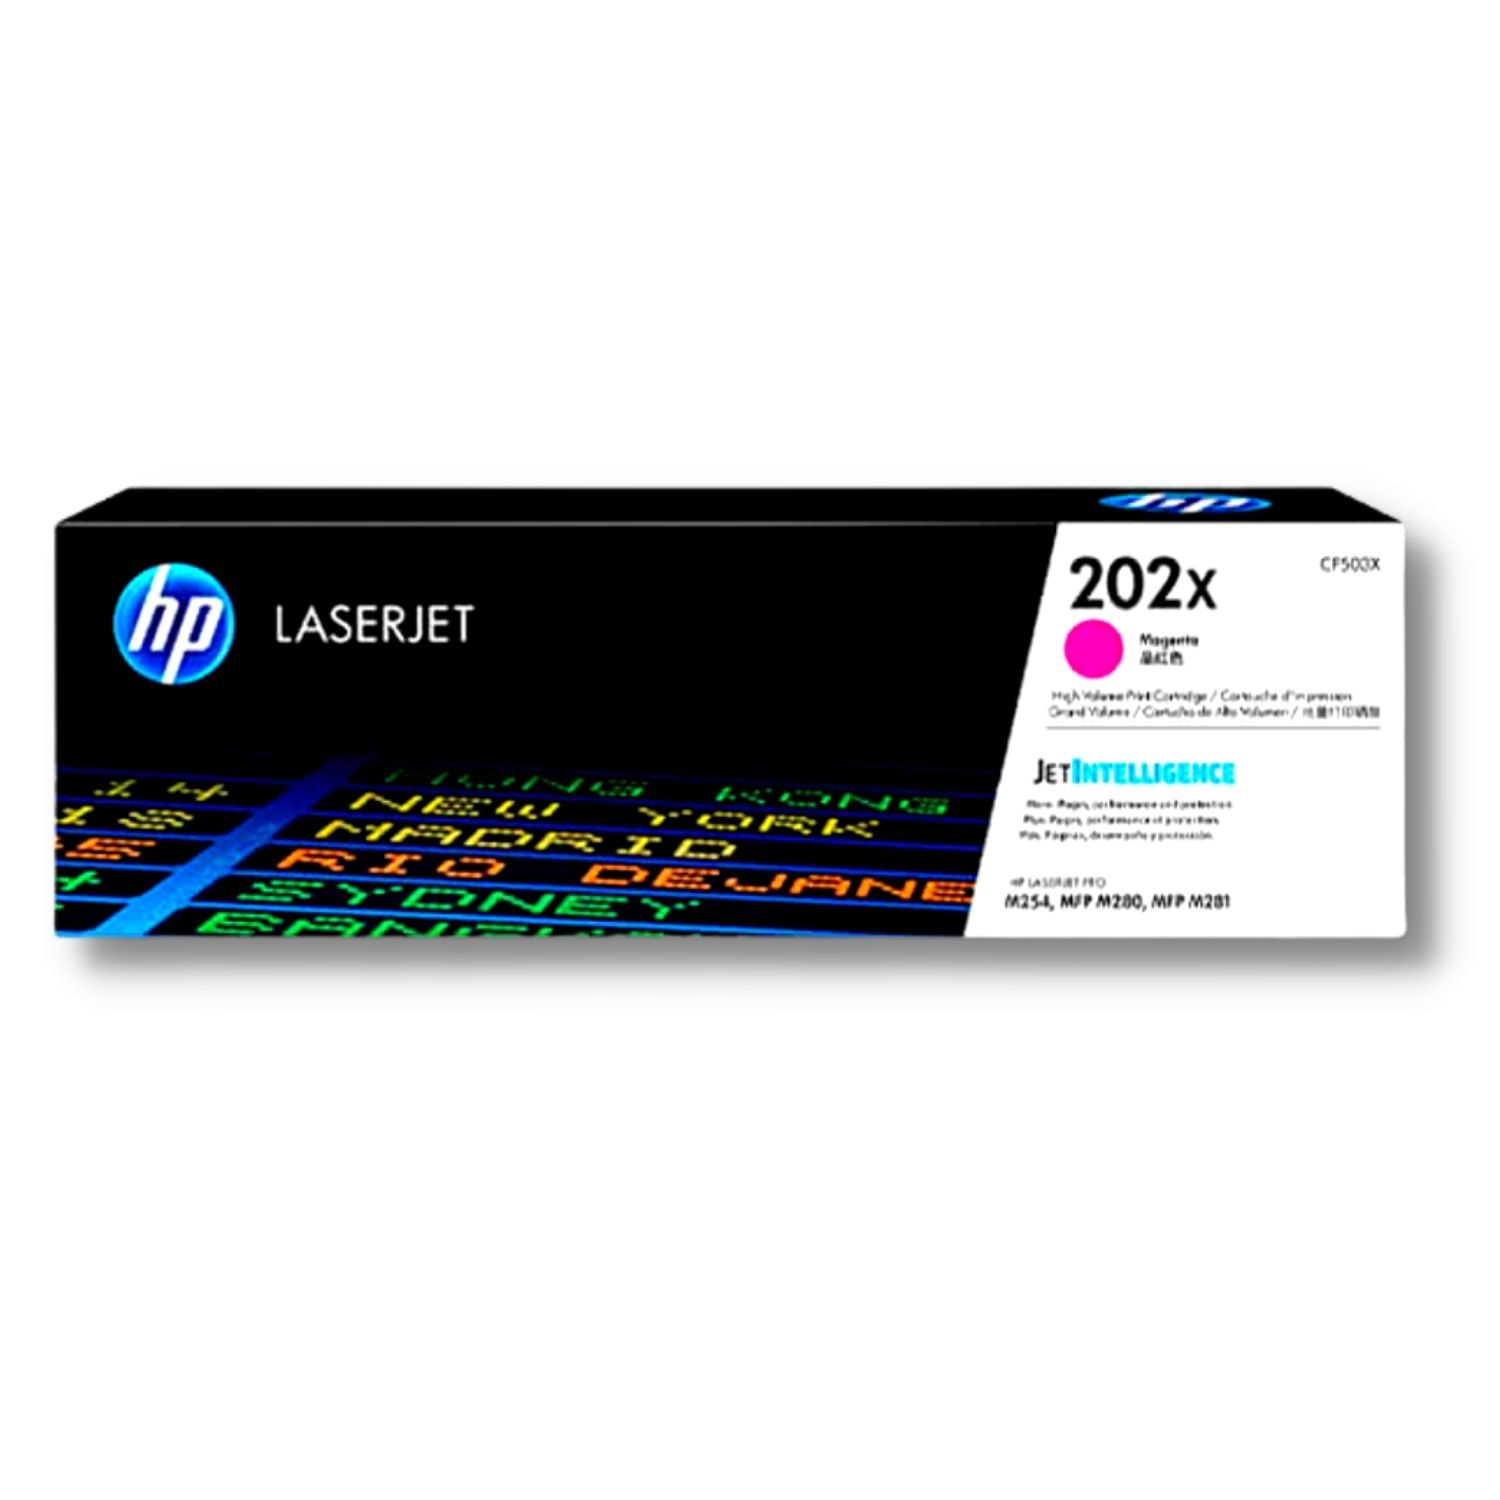 Toner HP CF503X (202X) Magenta LaserJet Pro M254, mfp M280, mfp M281